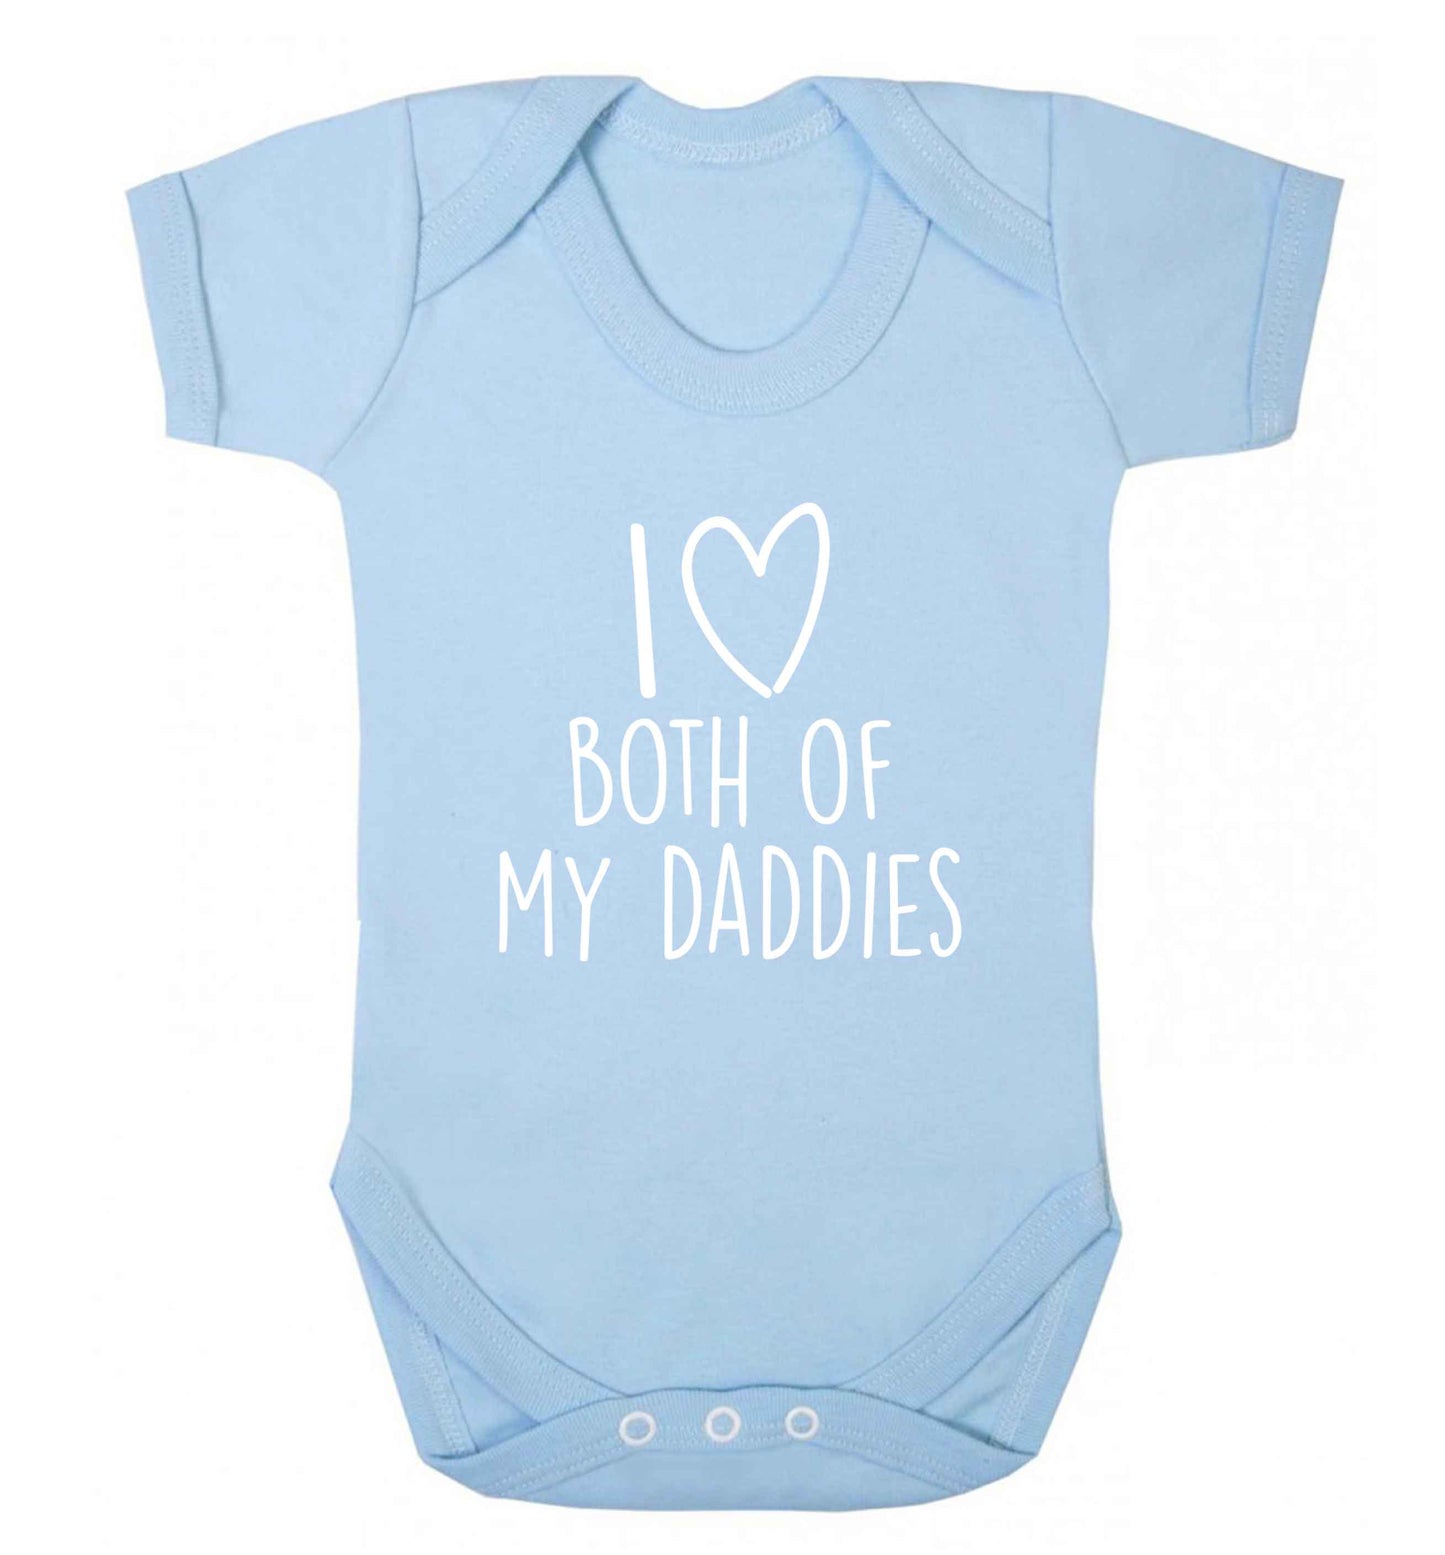 I love both of my daddies baby vest pale blue 18-24 months